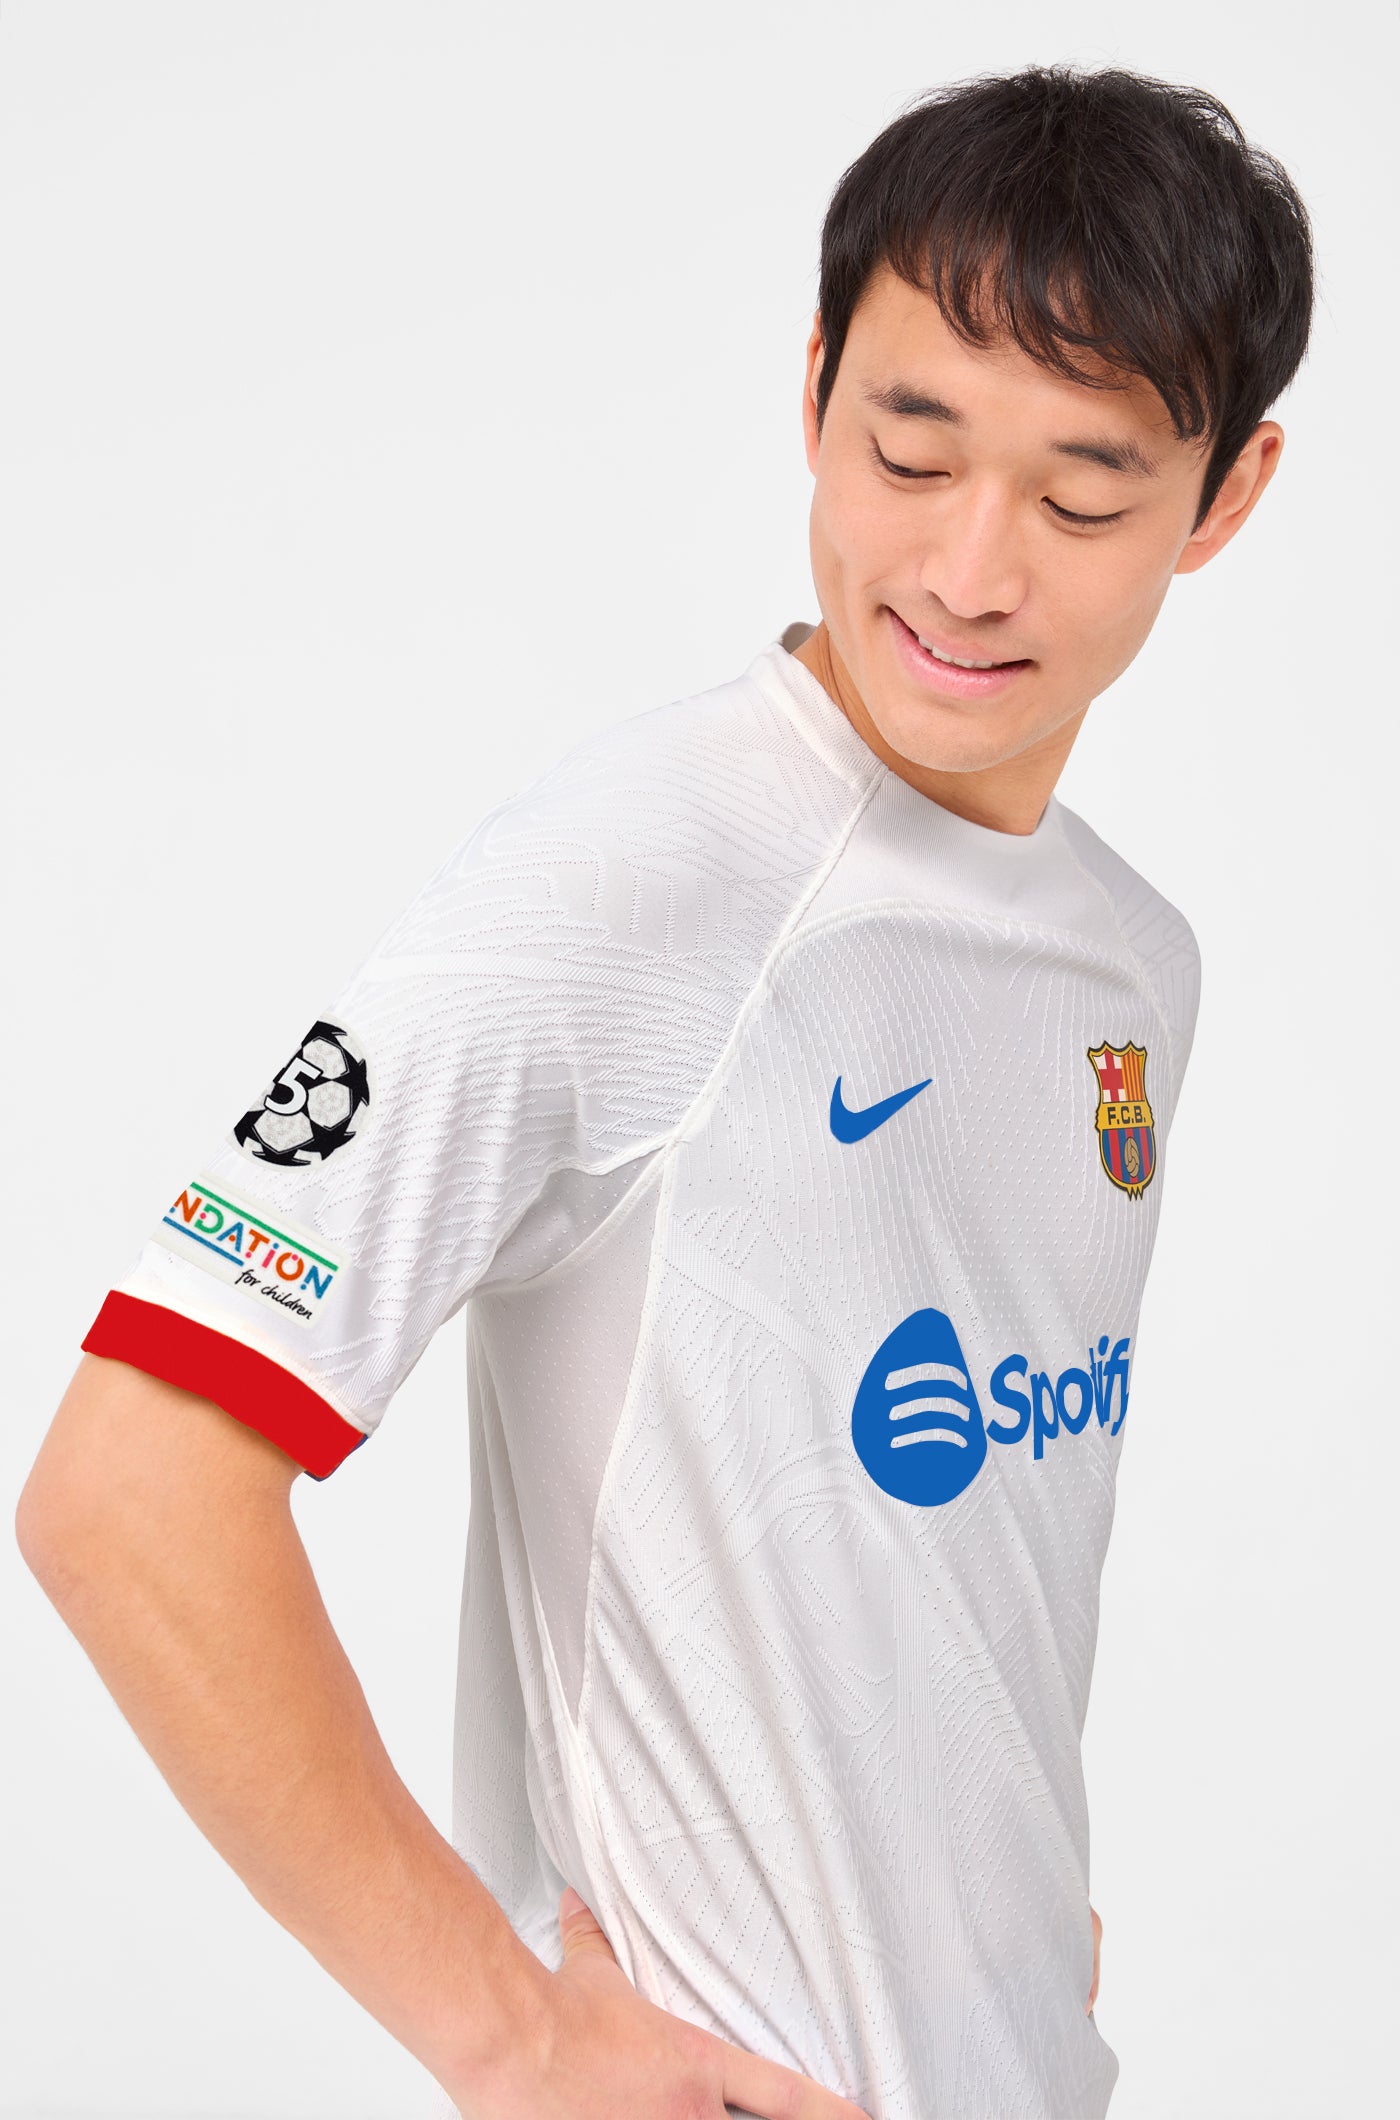 UCL FC Barcelona away shirt 23/24 Player’s Edition - JOÃO CANCELO